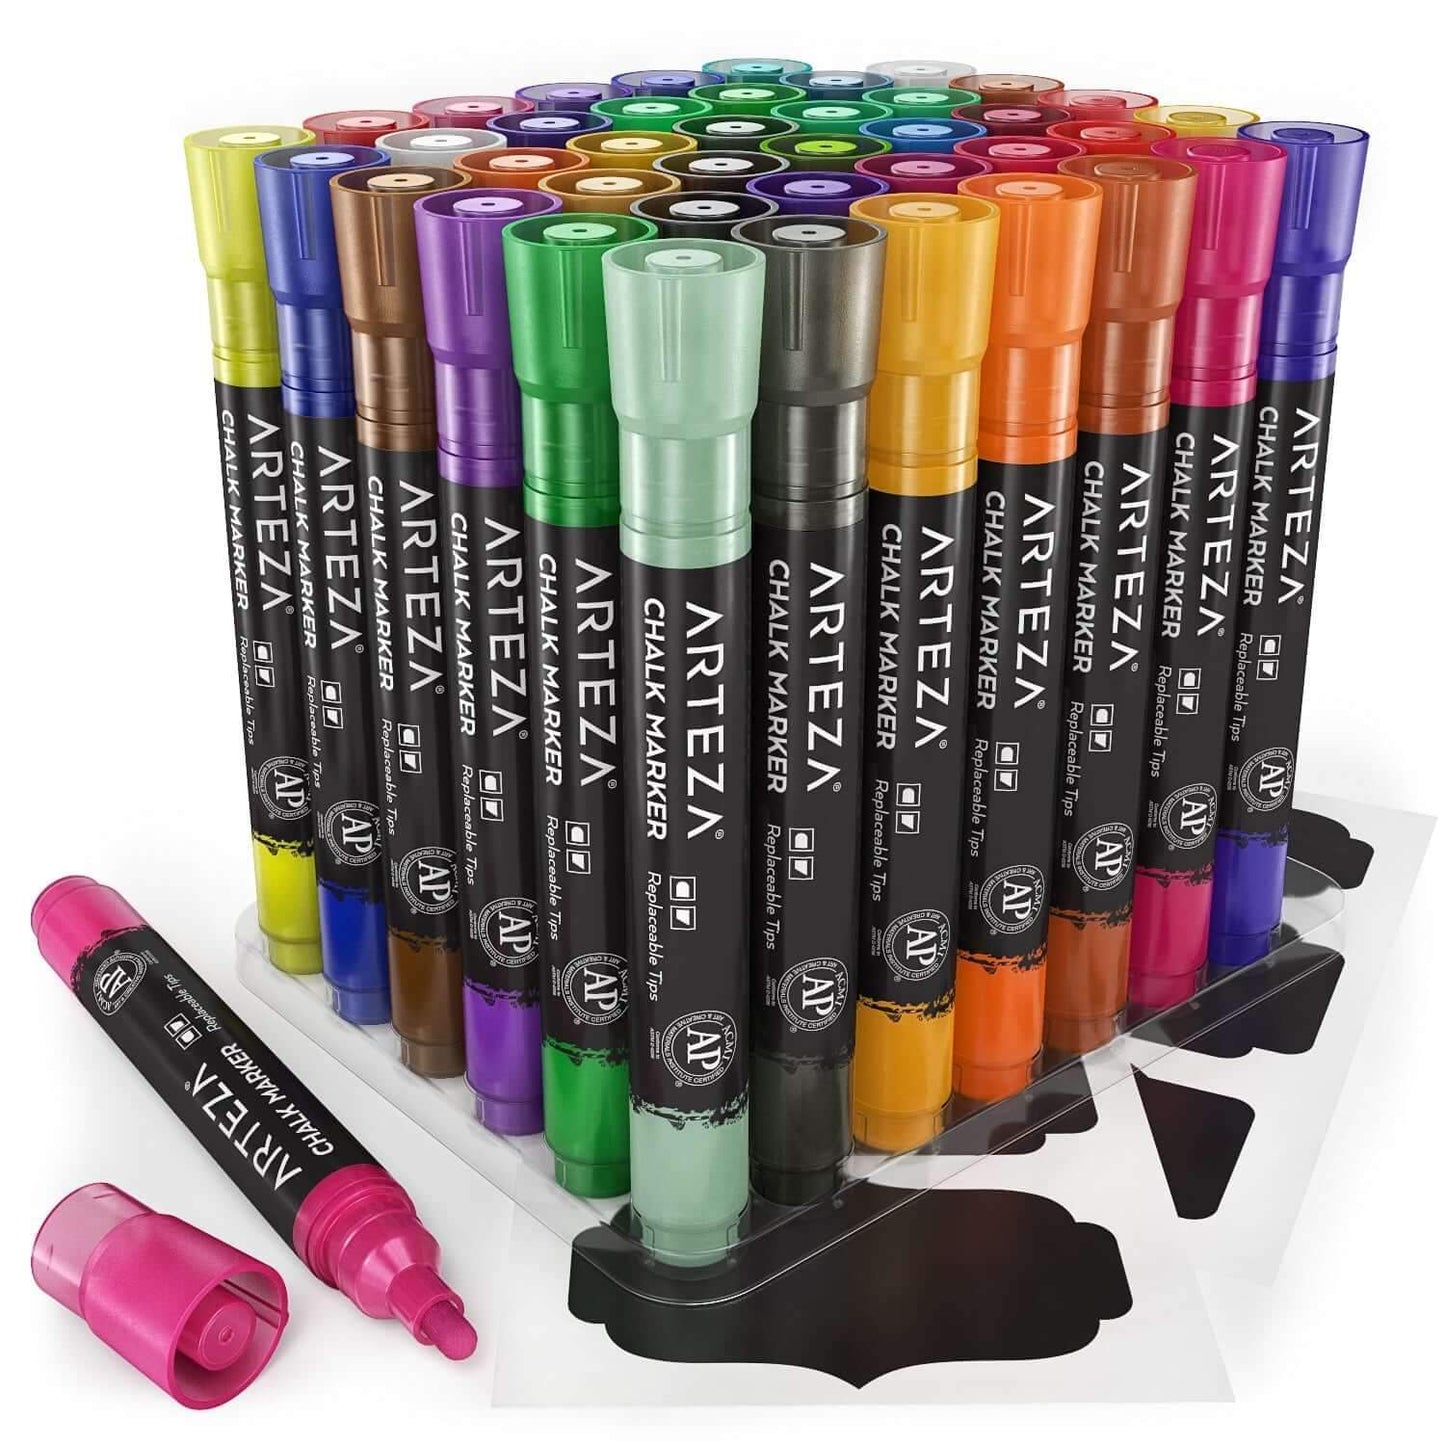 Arteza Liquid Chalk Markers, Metallic - Set of 8